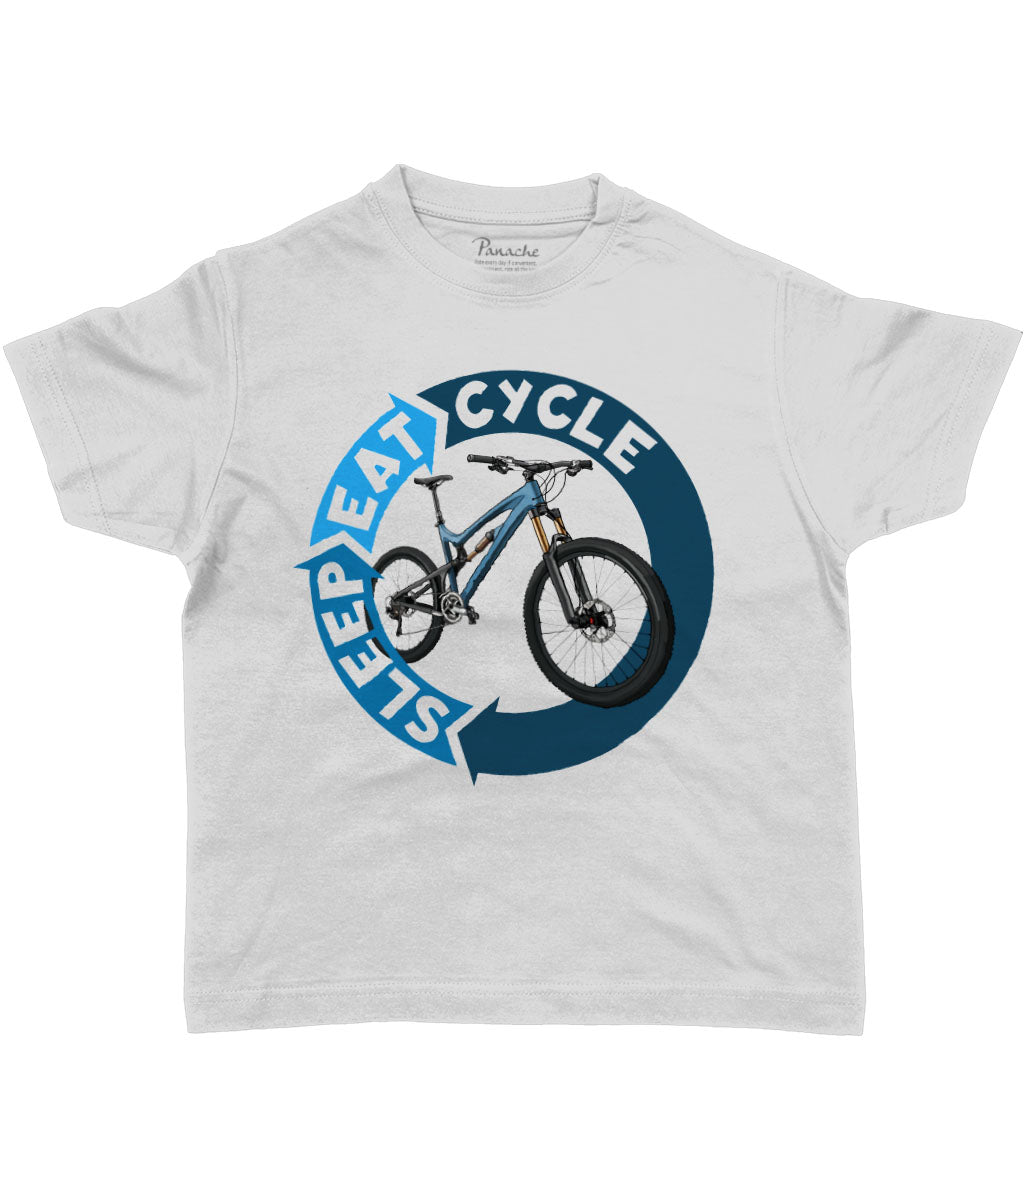 Cycle, Sleep, Eat, Cycle… Cool Kids Cycling T-shirt Grey